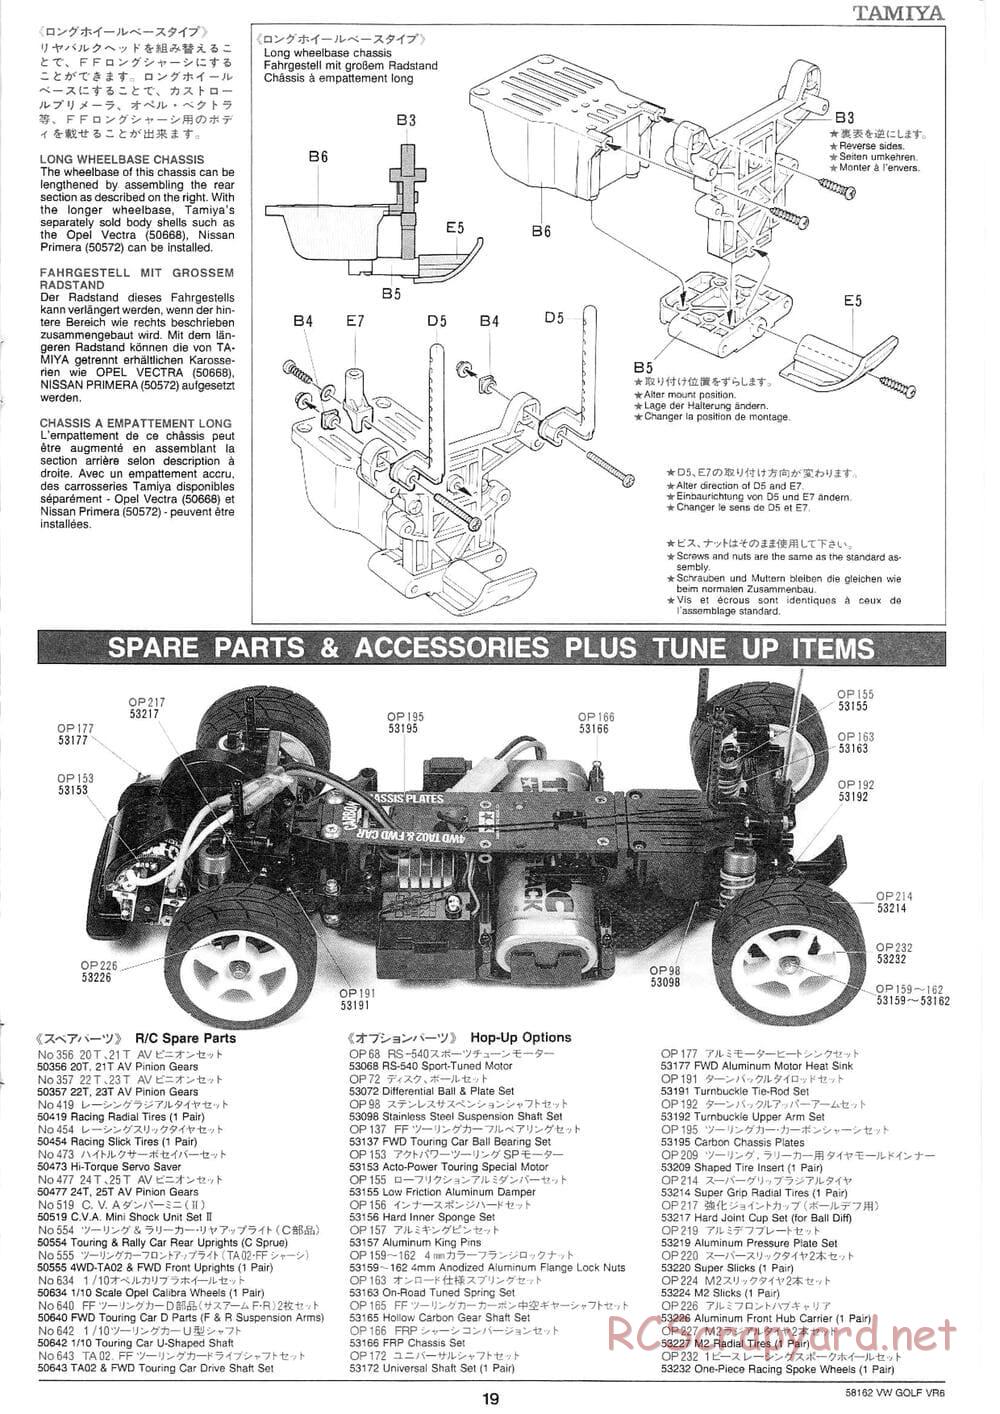 Tamiya - Volkswagen Golf VR6 - FF-01 Chassis - Manual - Page 19